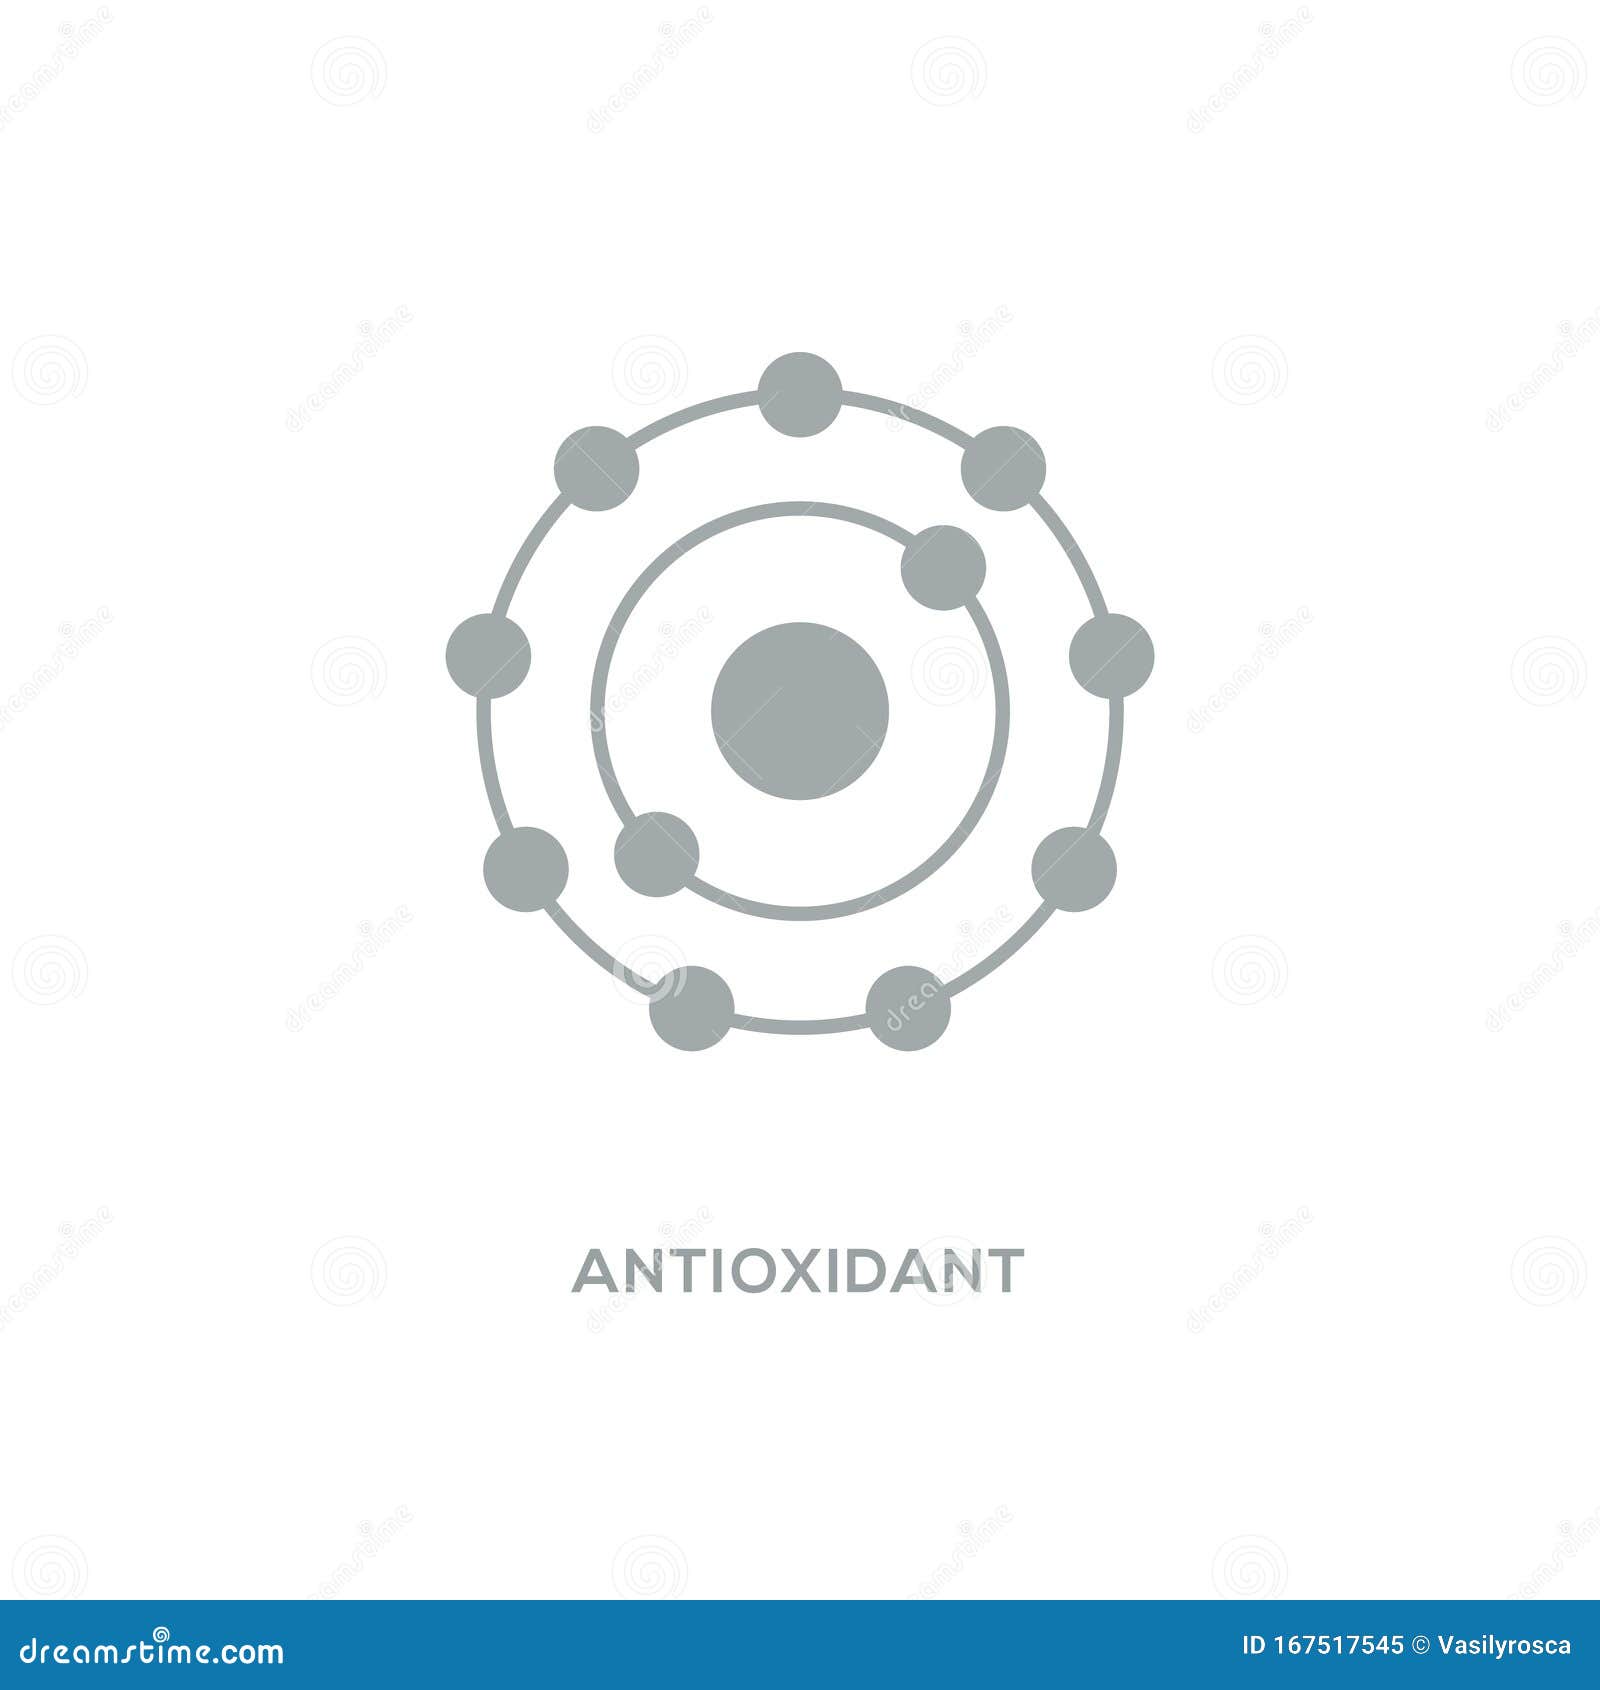 antioxidant  icon, radical free oxidant molecule